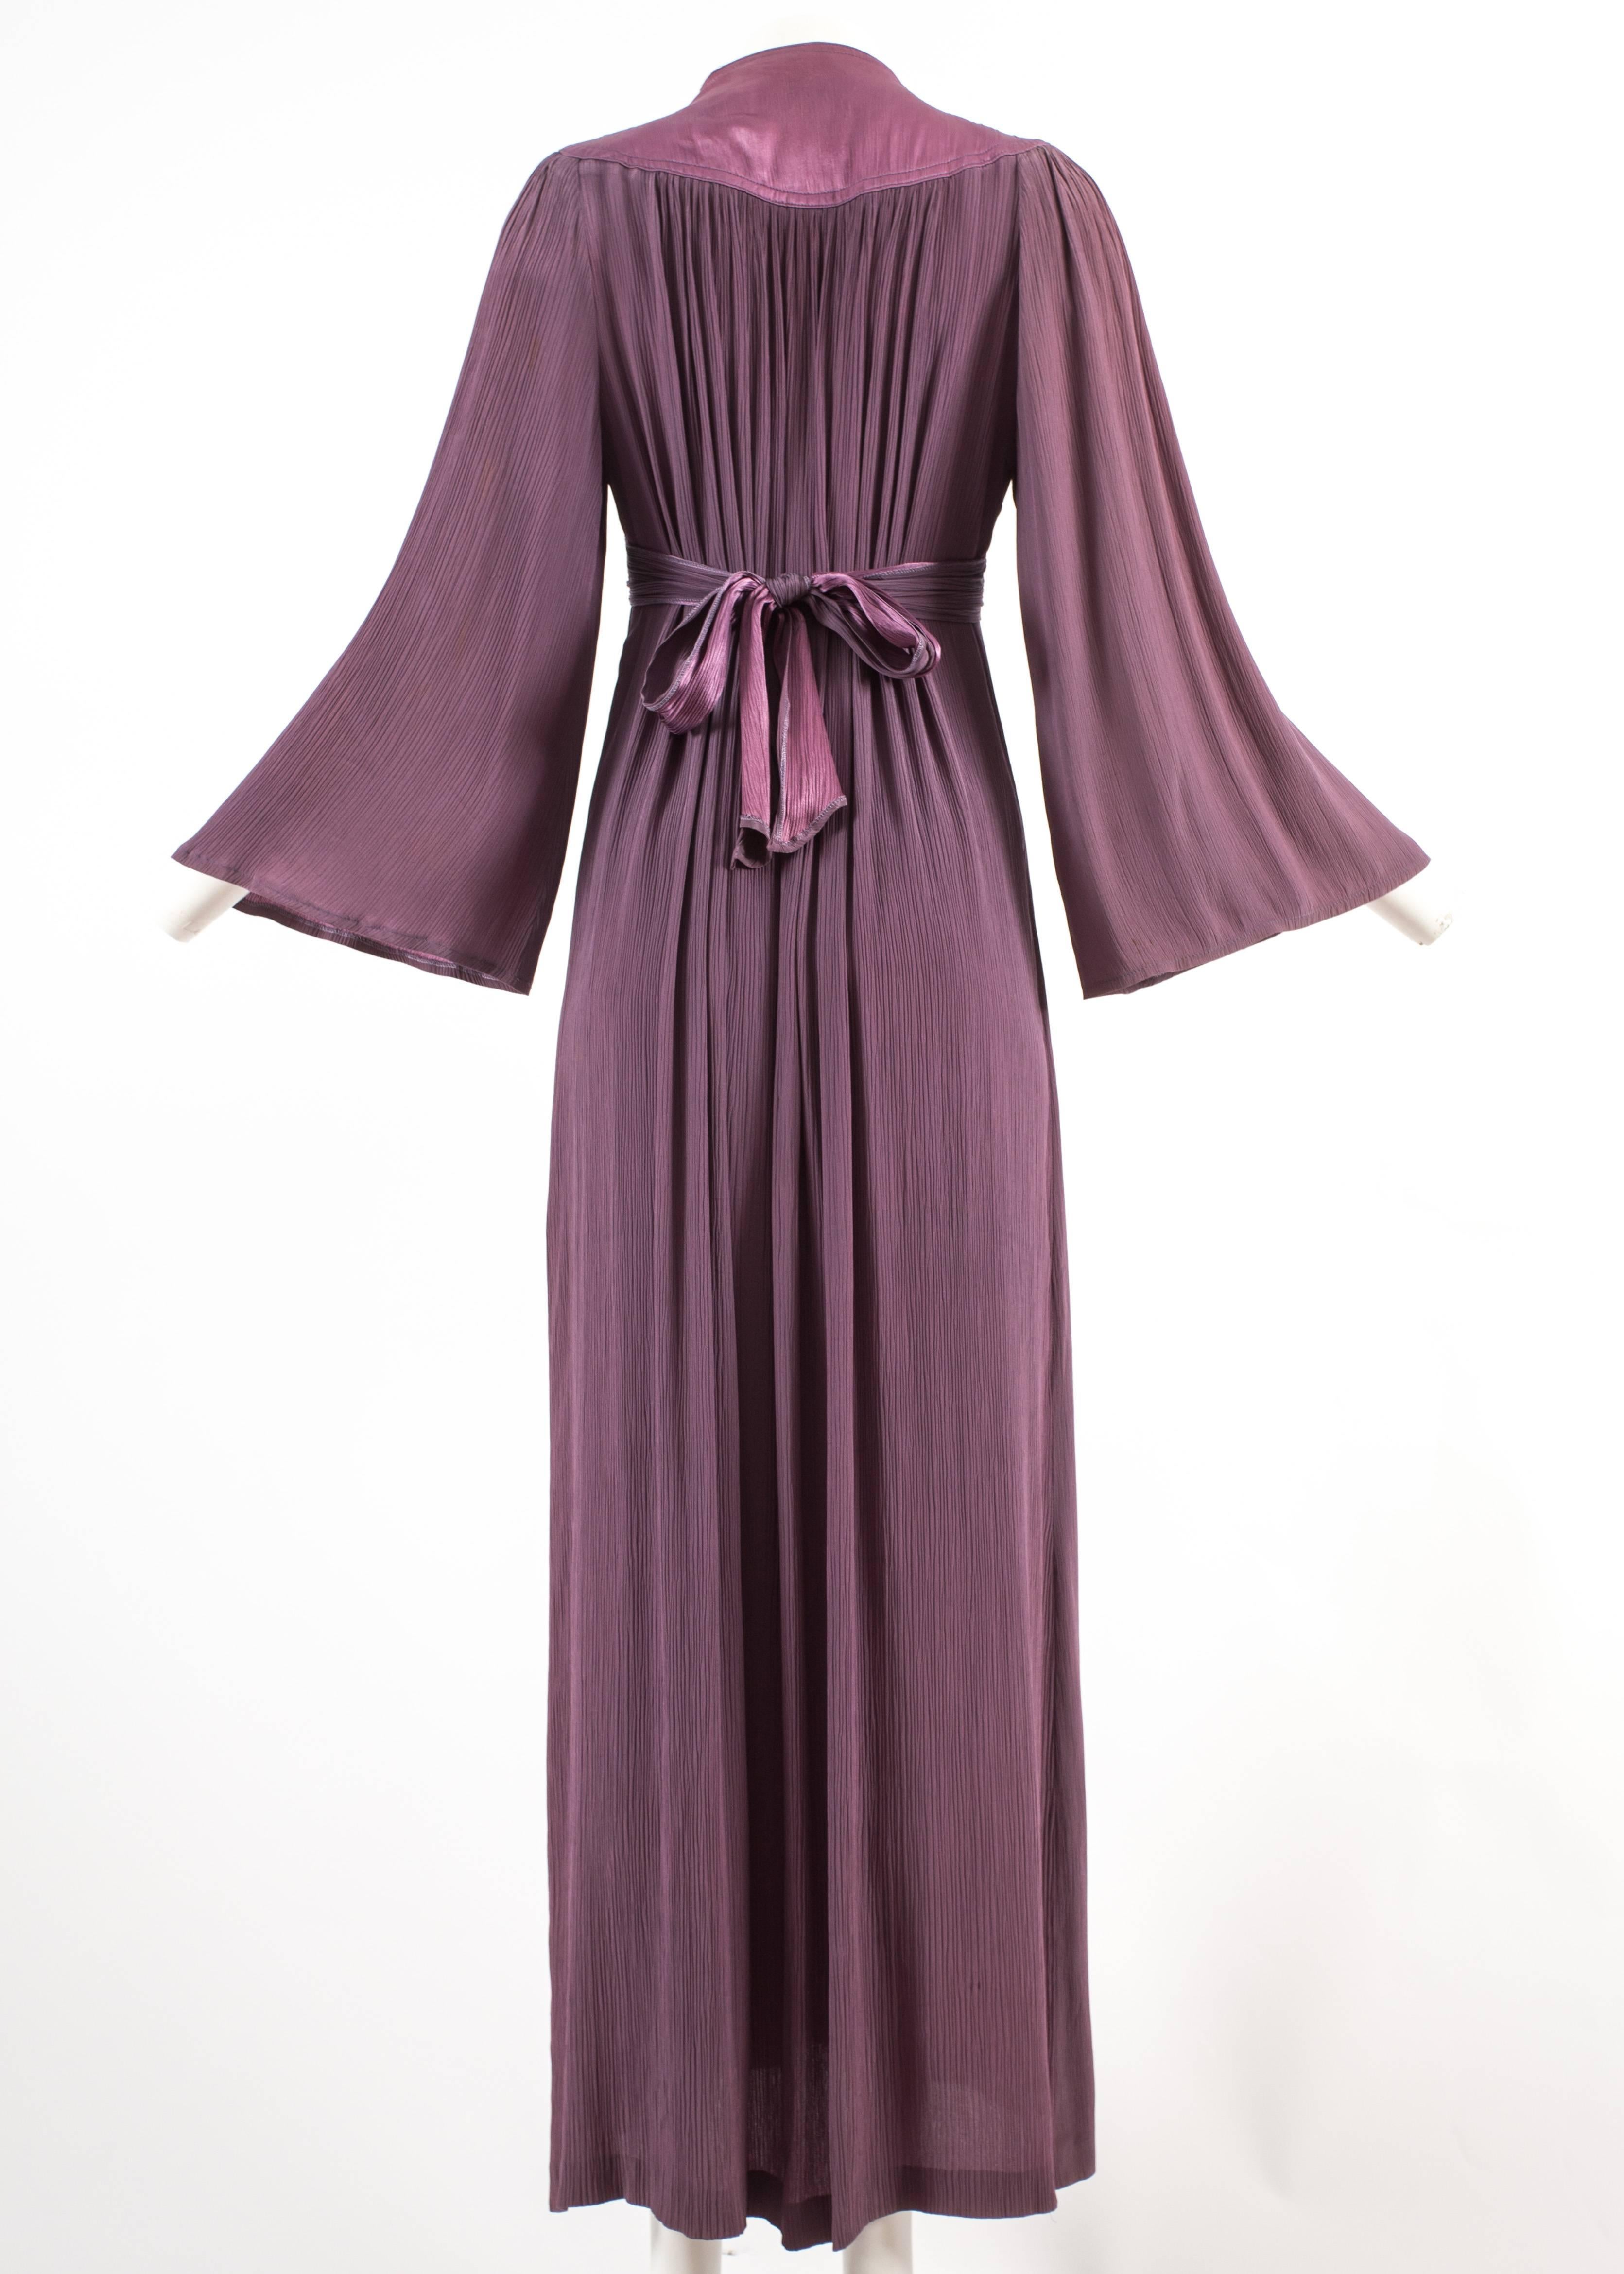 Ossie Clark 1970 pleated purple evening dress 1